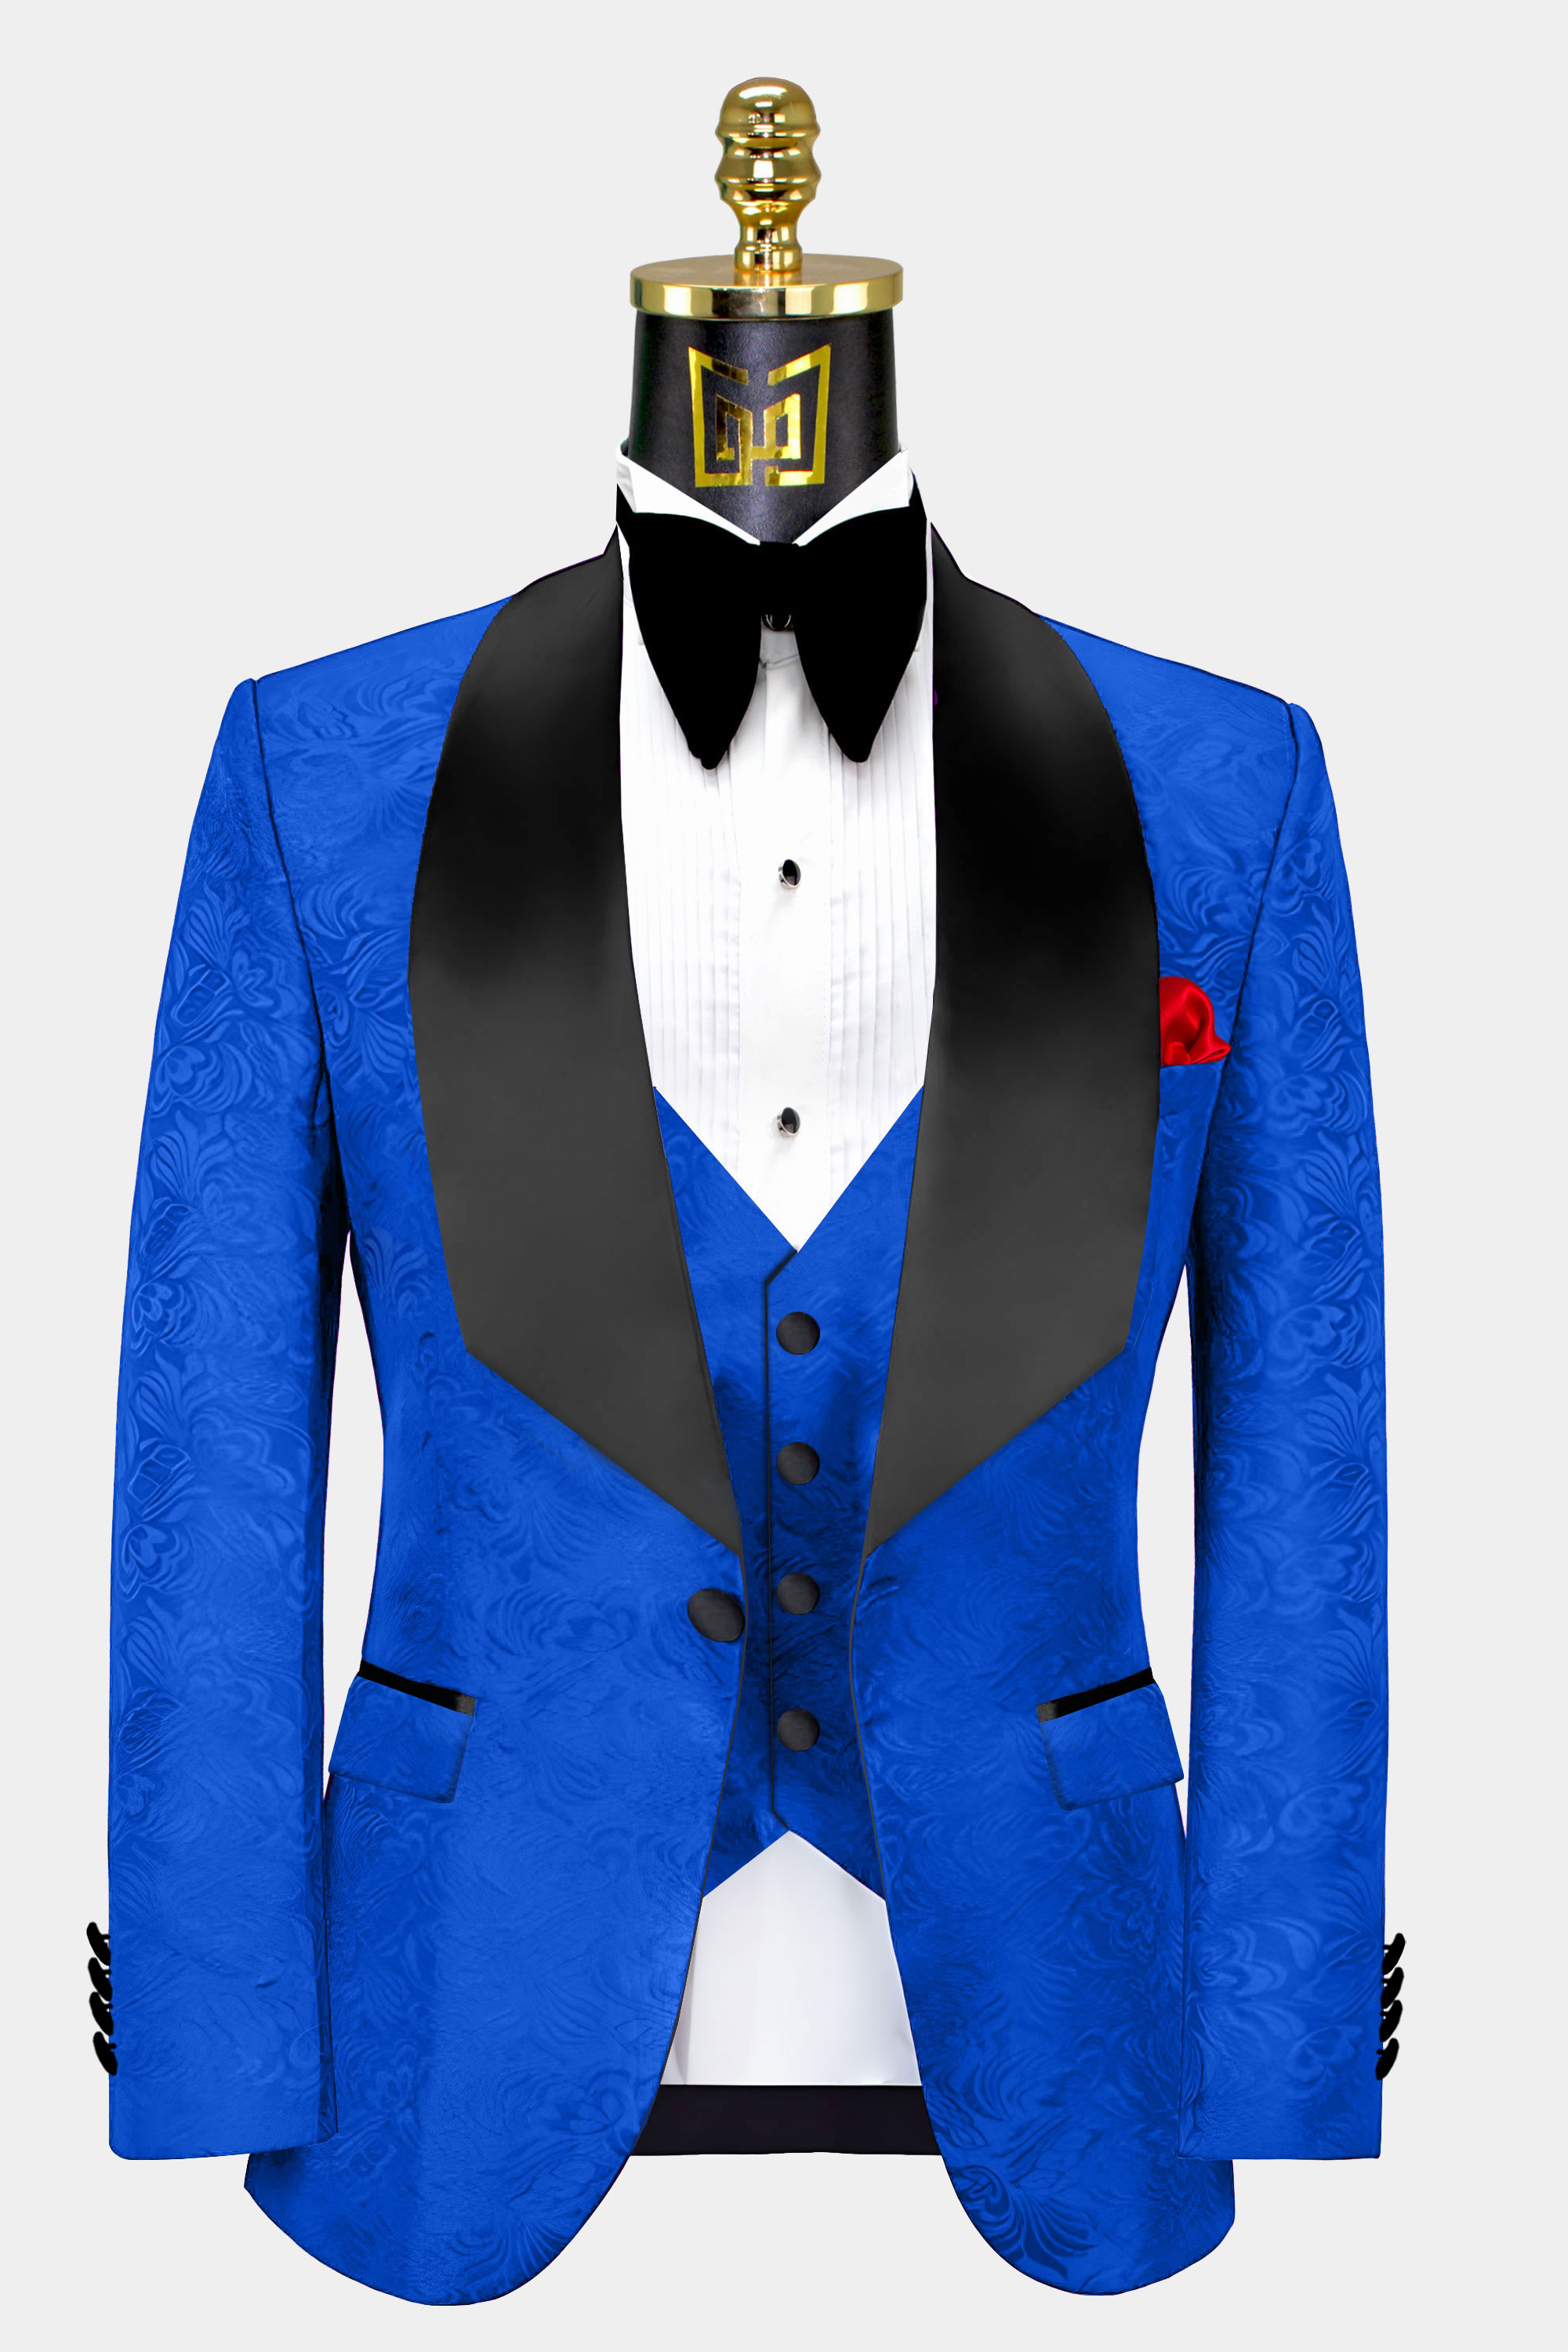 Royal-Blue-and-Black-Tuxedo-Jacket-from-Gentlemansguru.com